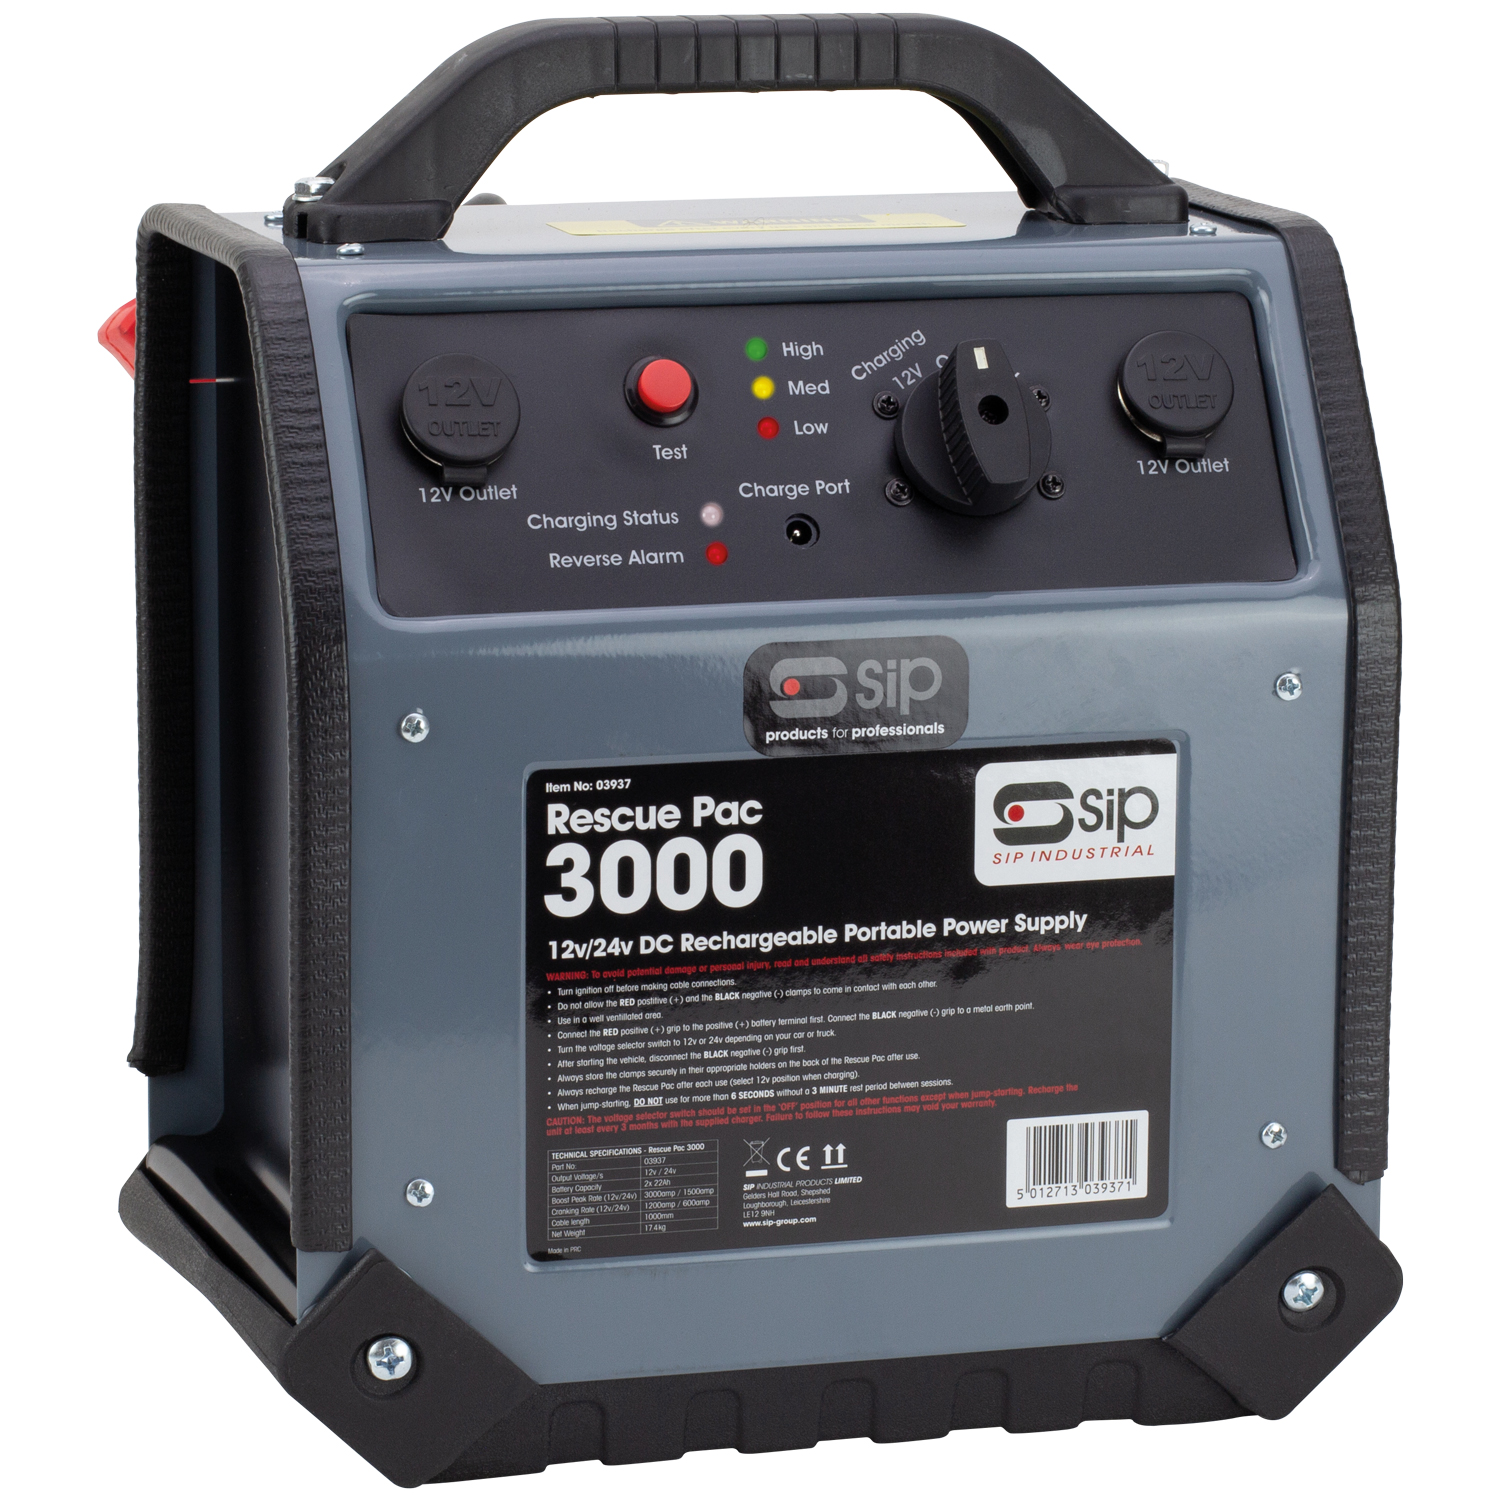 SIP Professional Booster 12/24v Rescue Pack 3000 03937 | 2x 12v DC output sockets